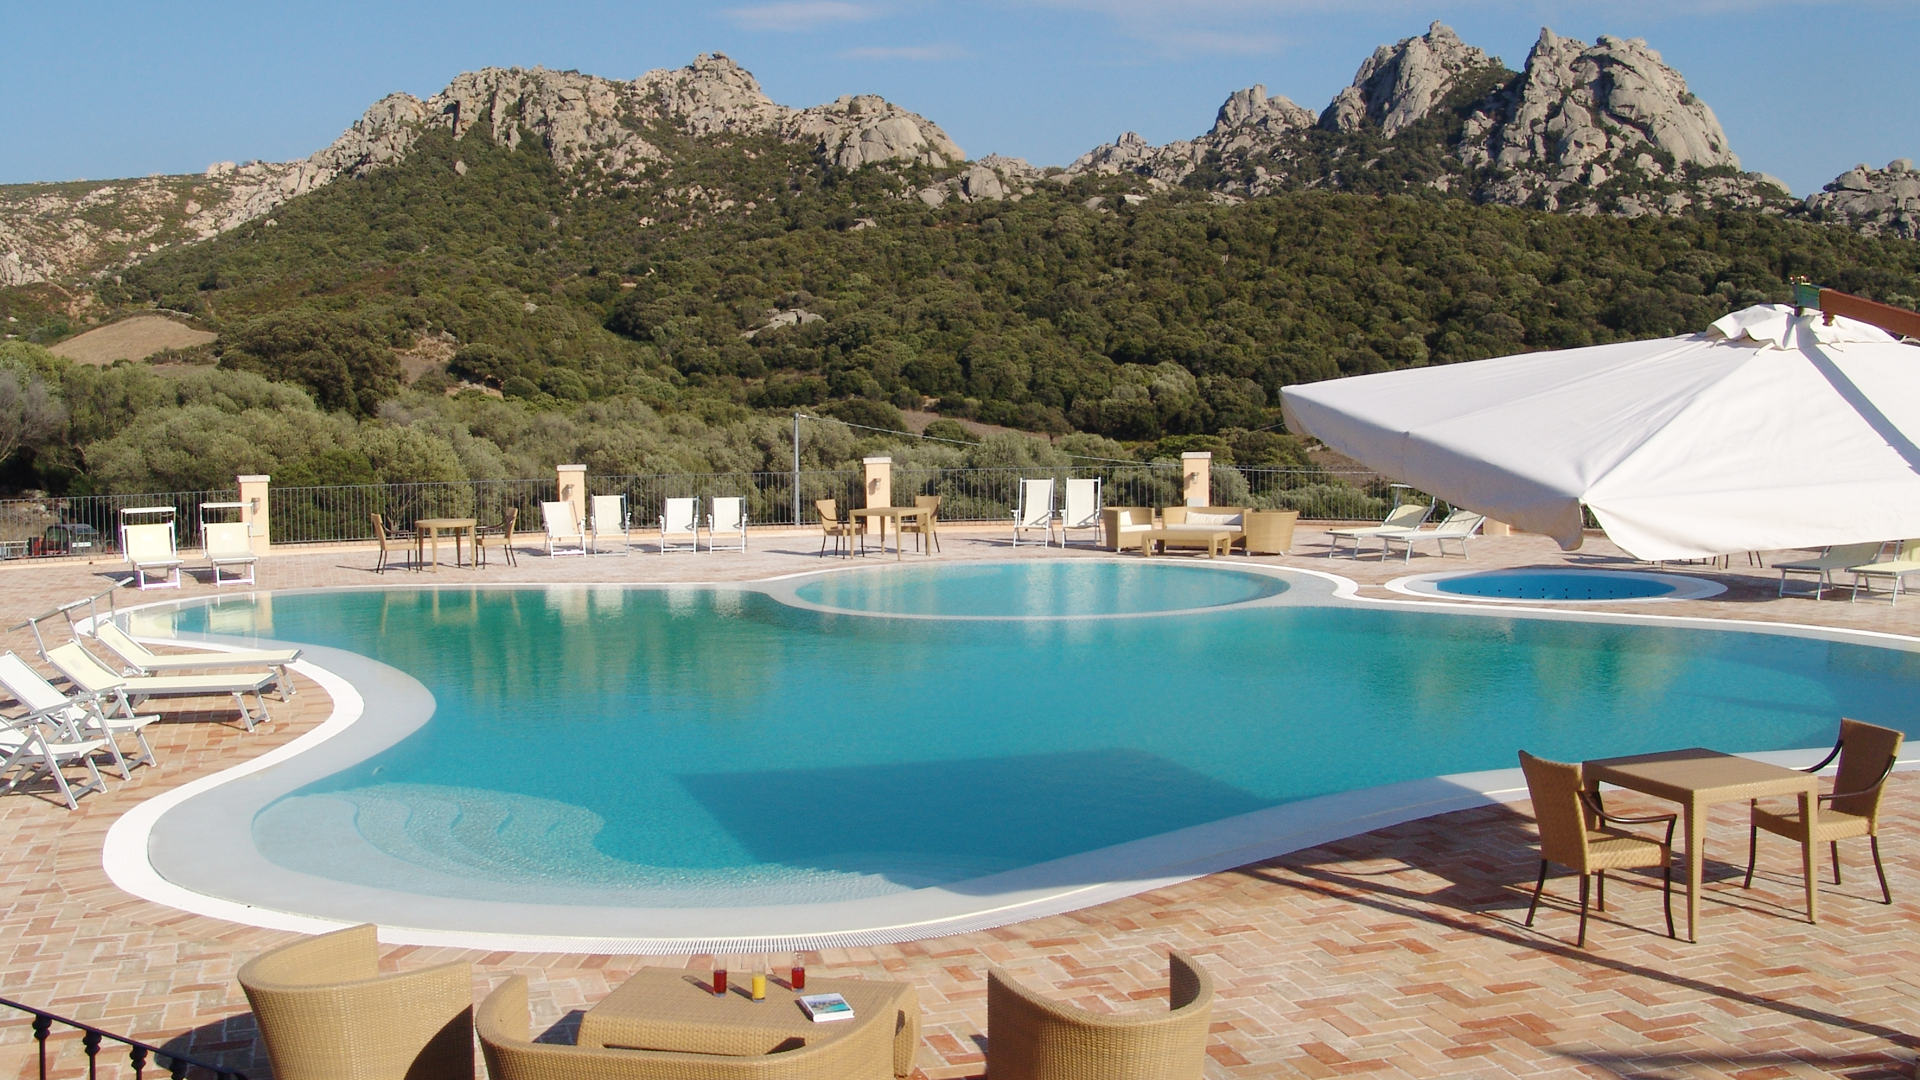 Swimmingpool på Hotel Parco degli Ulivi - Sardinien, Italien - Kulturrejser